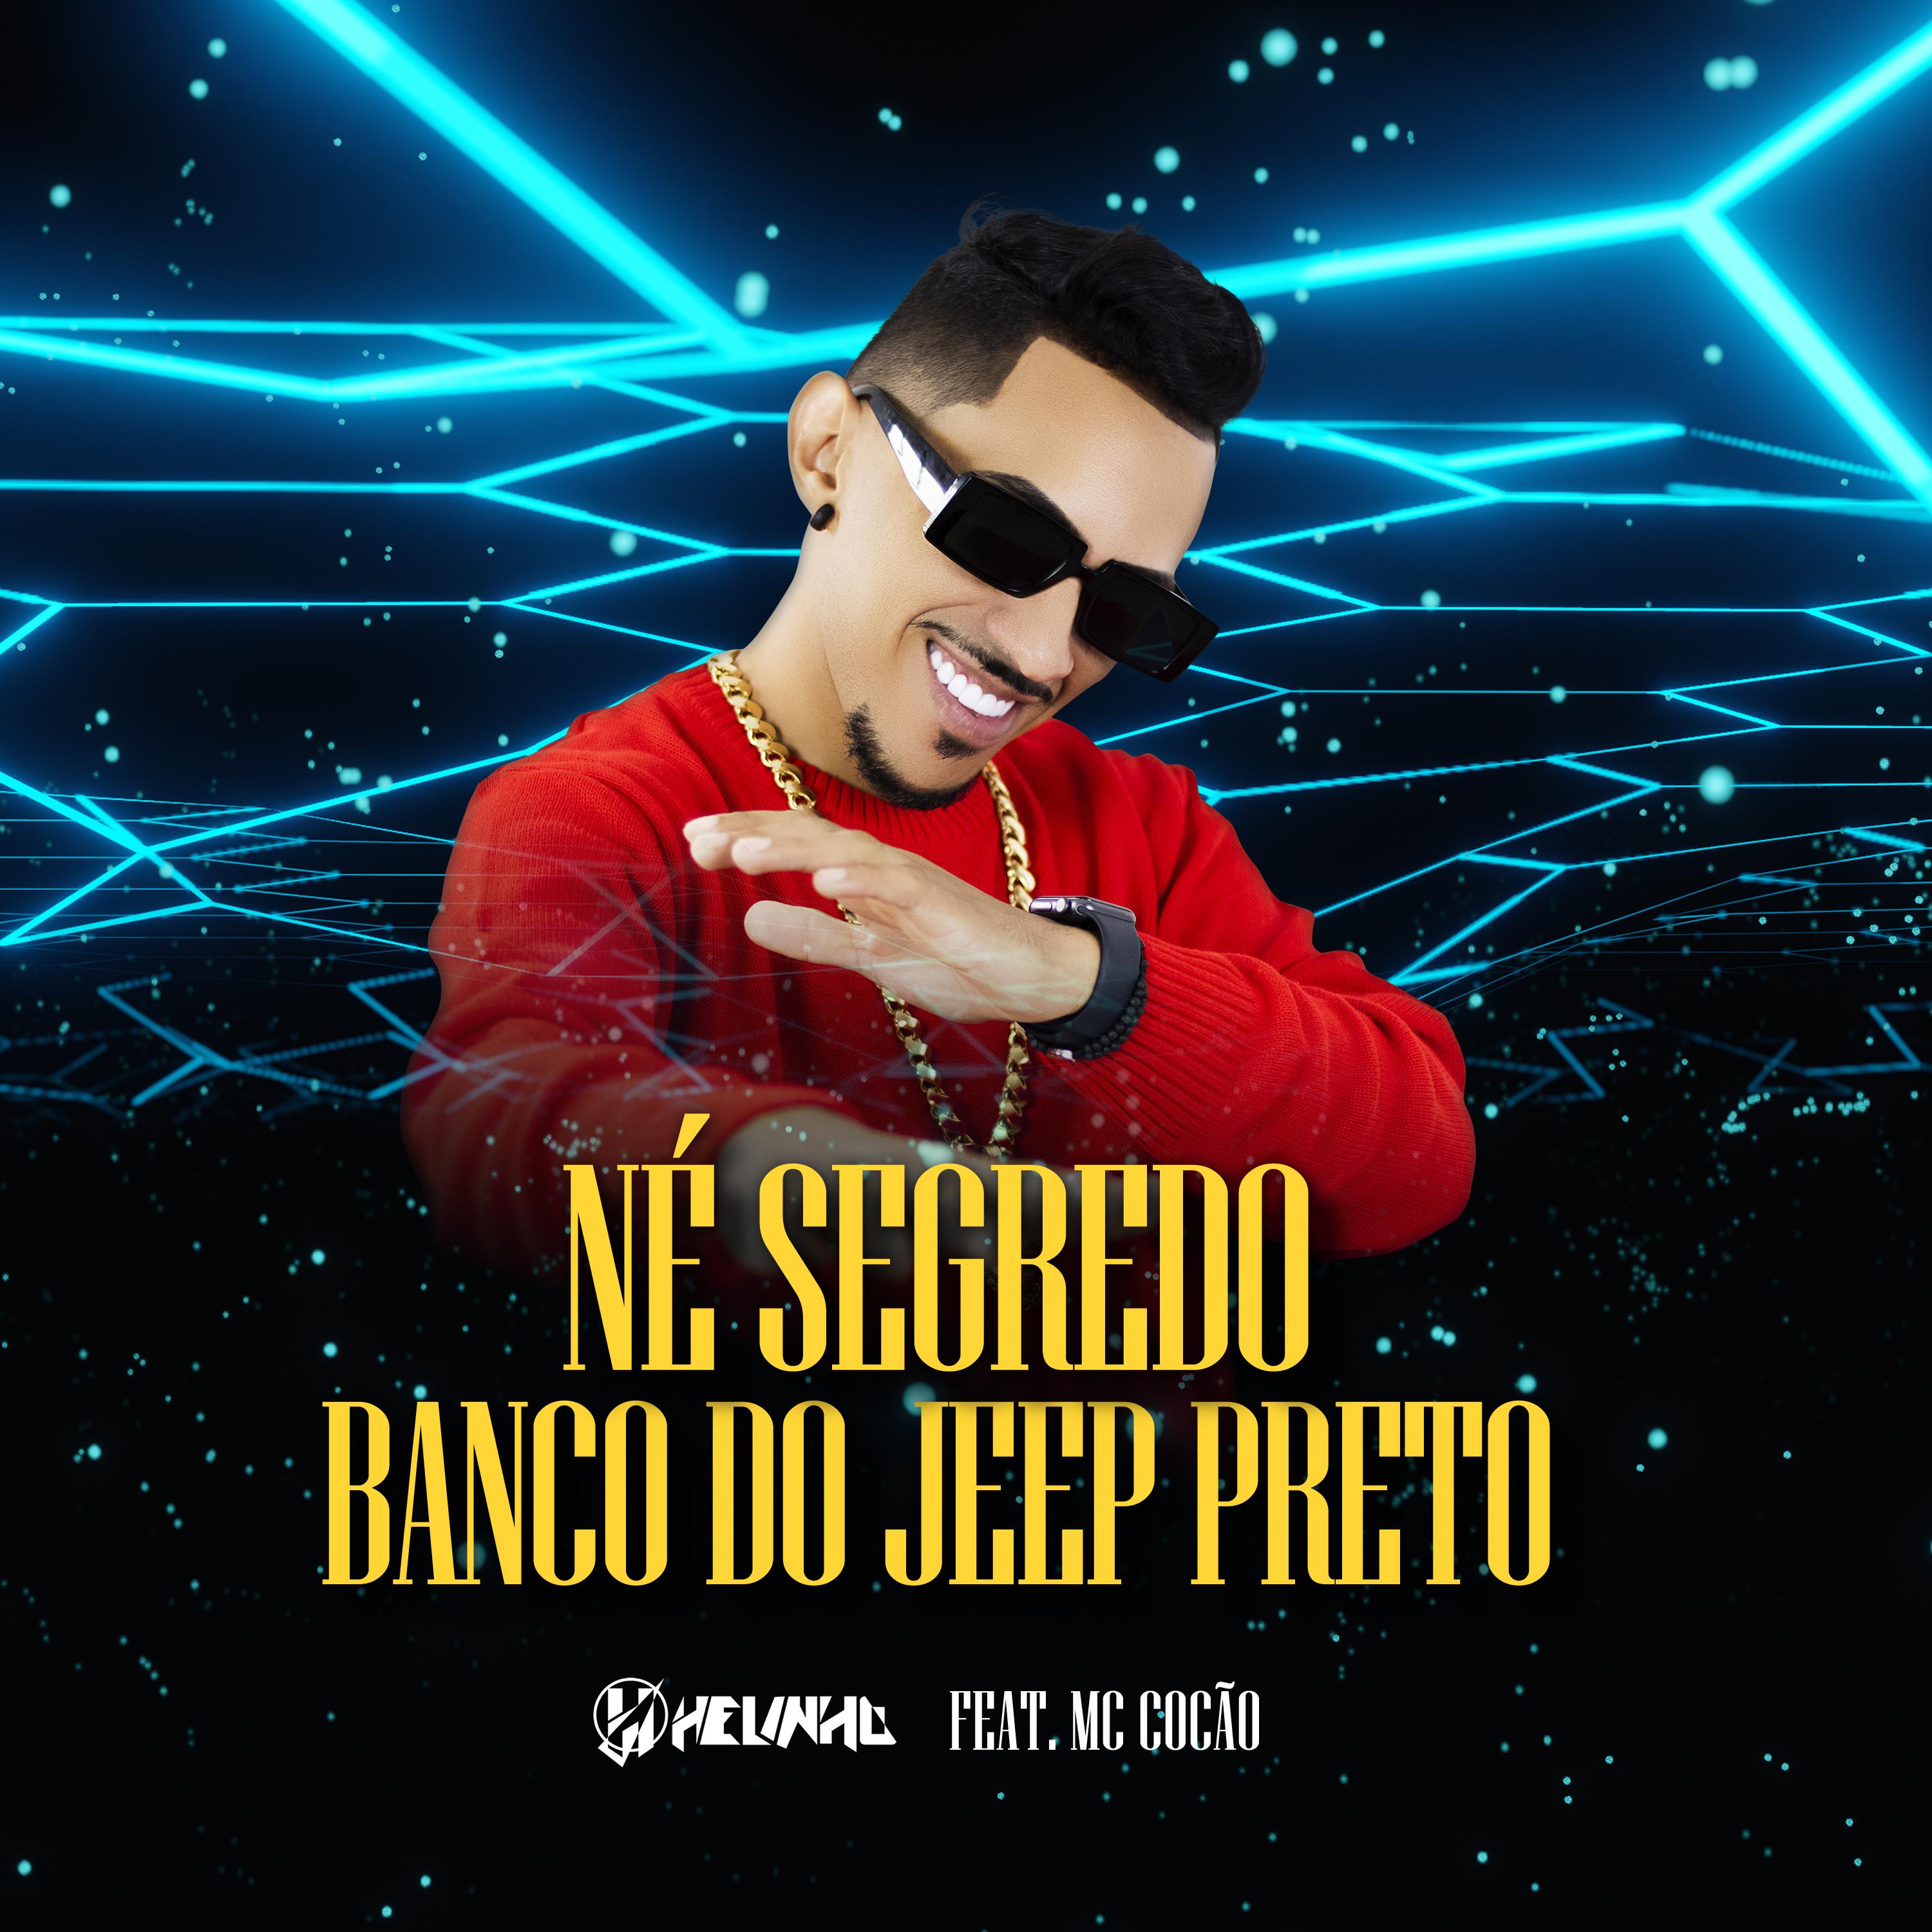 DJ Helinho - Banco do Jeep Preto, Né Segredo